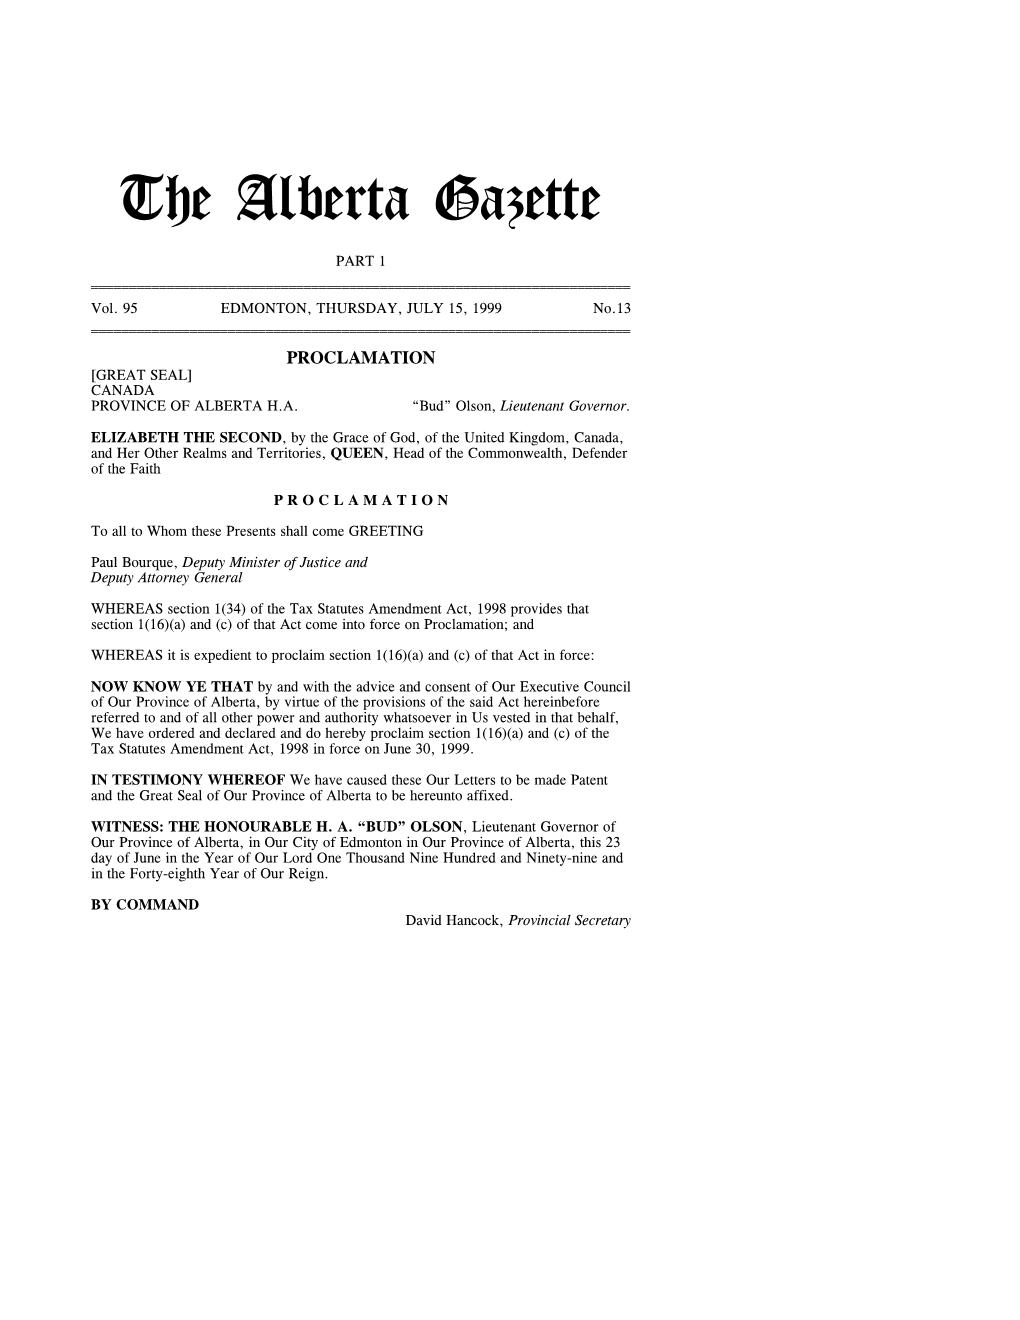 The Alberta Gazette, Part I, July 15, 1999